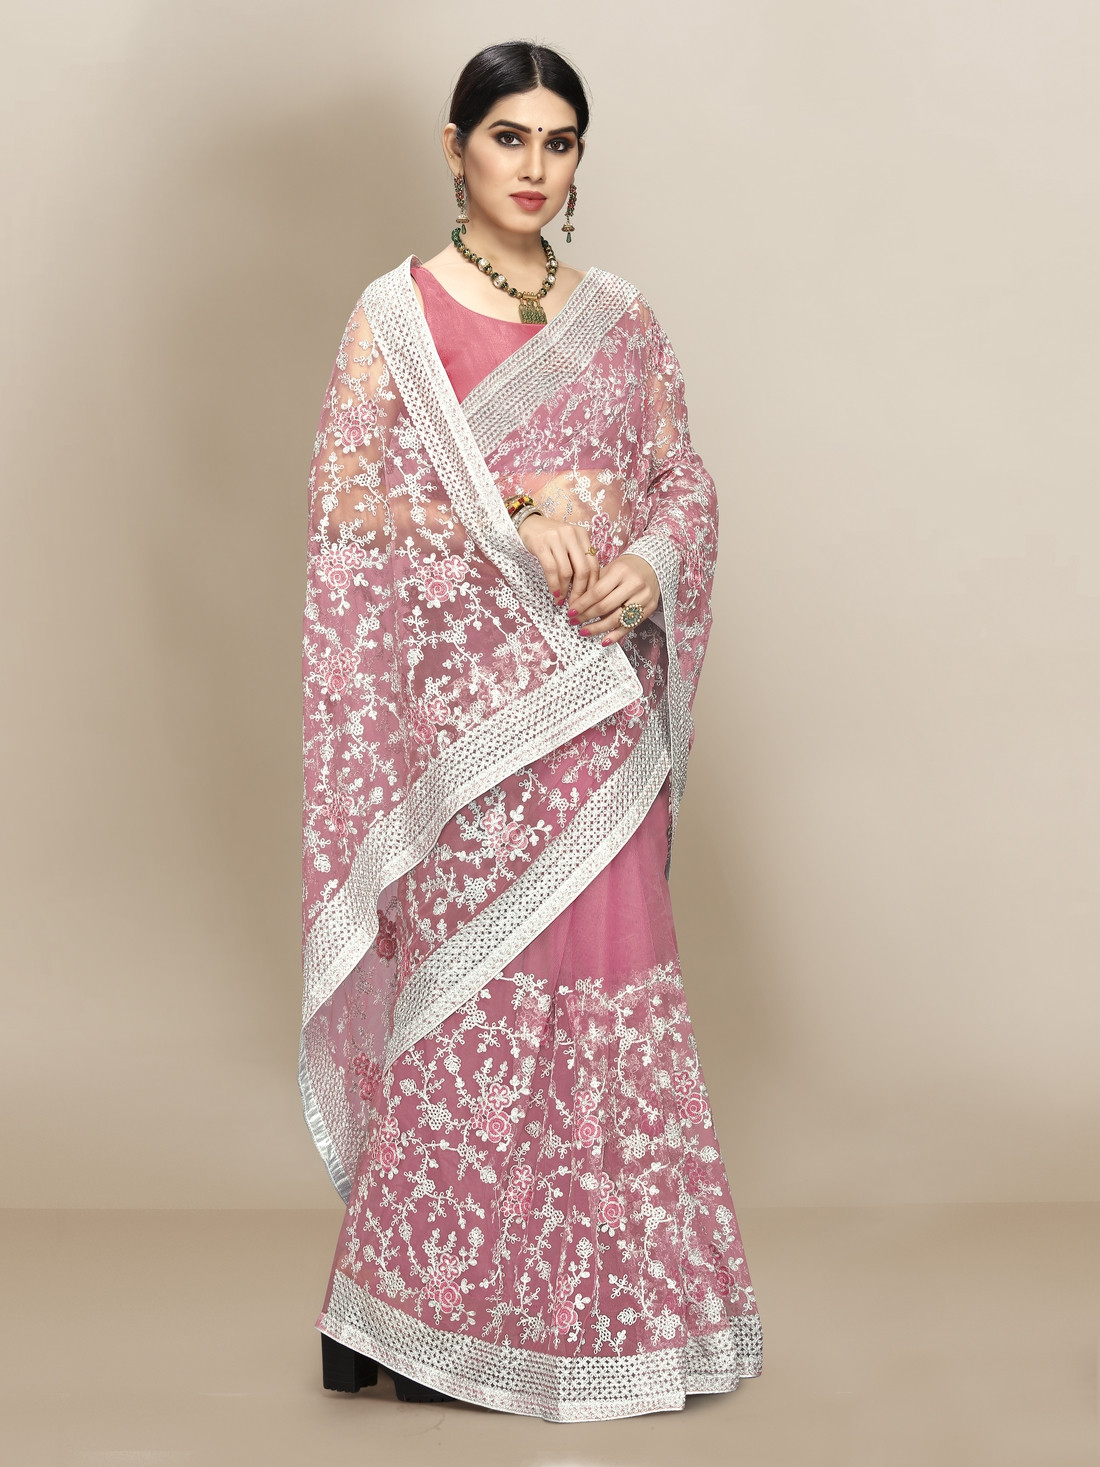 Super Net beautiful Designer Saree with extraordinary embroidery -Pink